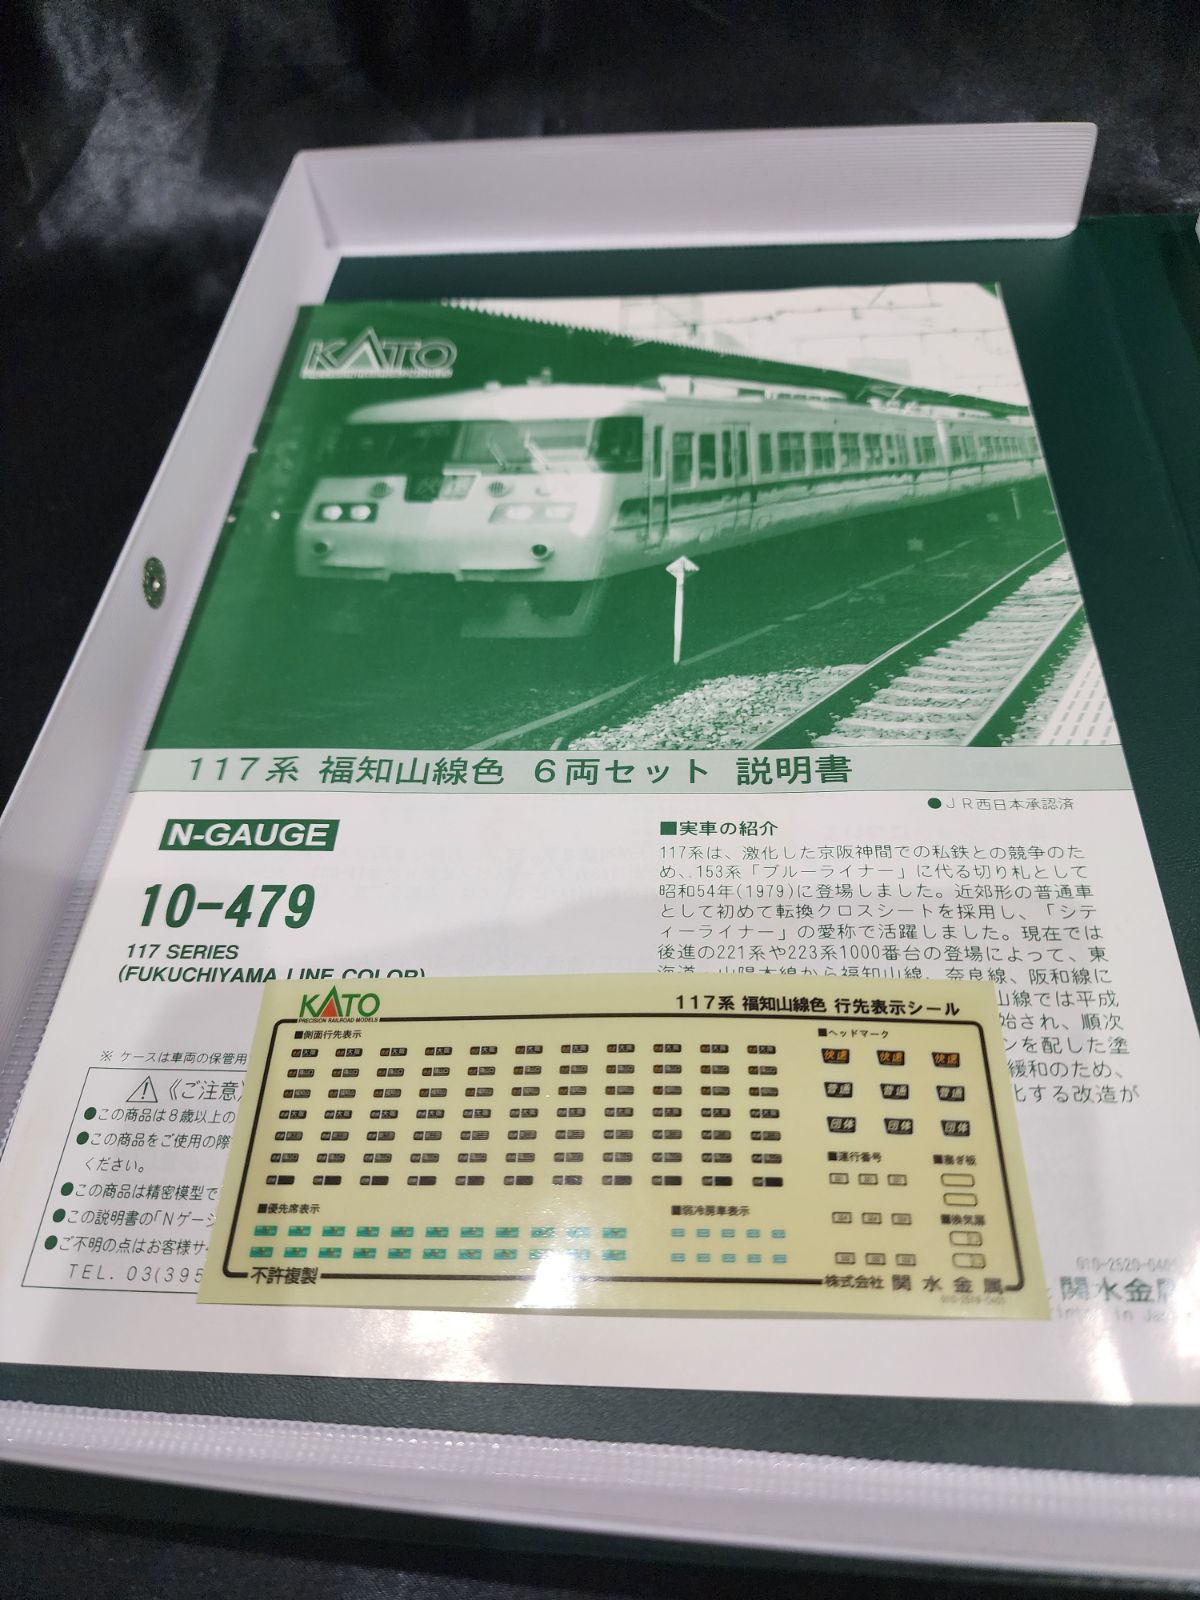 KATO 10-479 117系福知山線色 Nゲージ - 鉄道模型